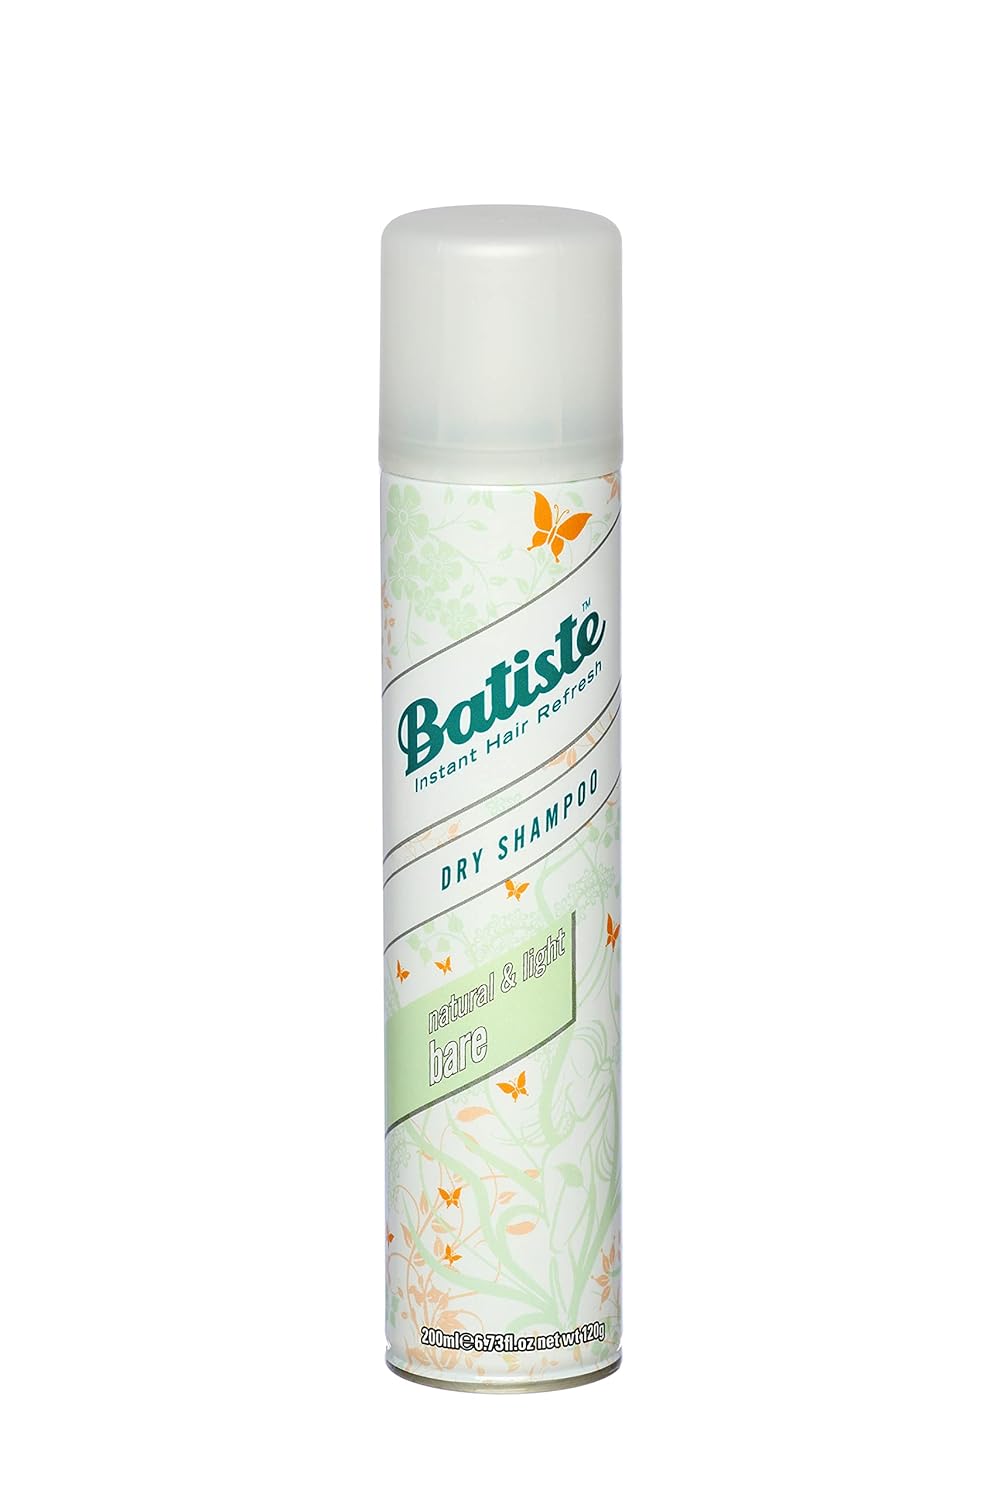 Batiste Dry Shampoo, Bare, 6.73 oz